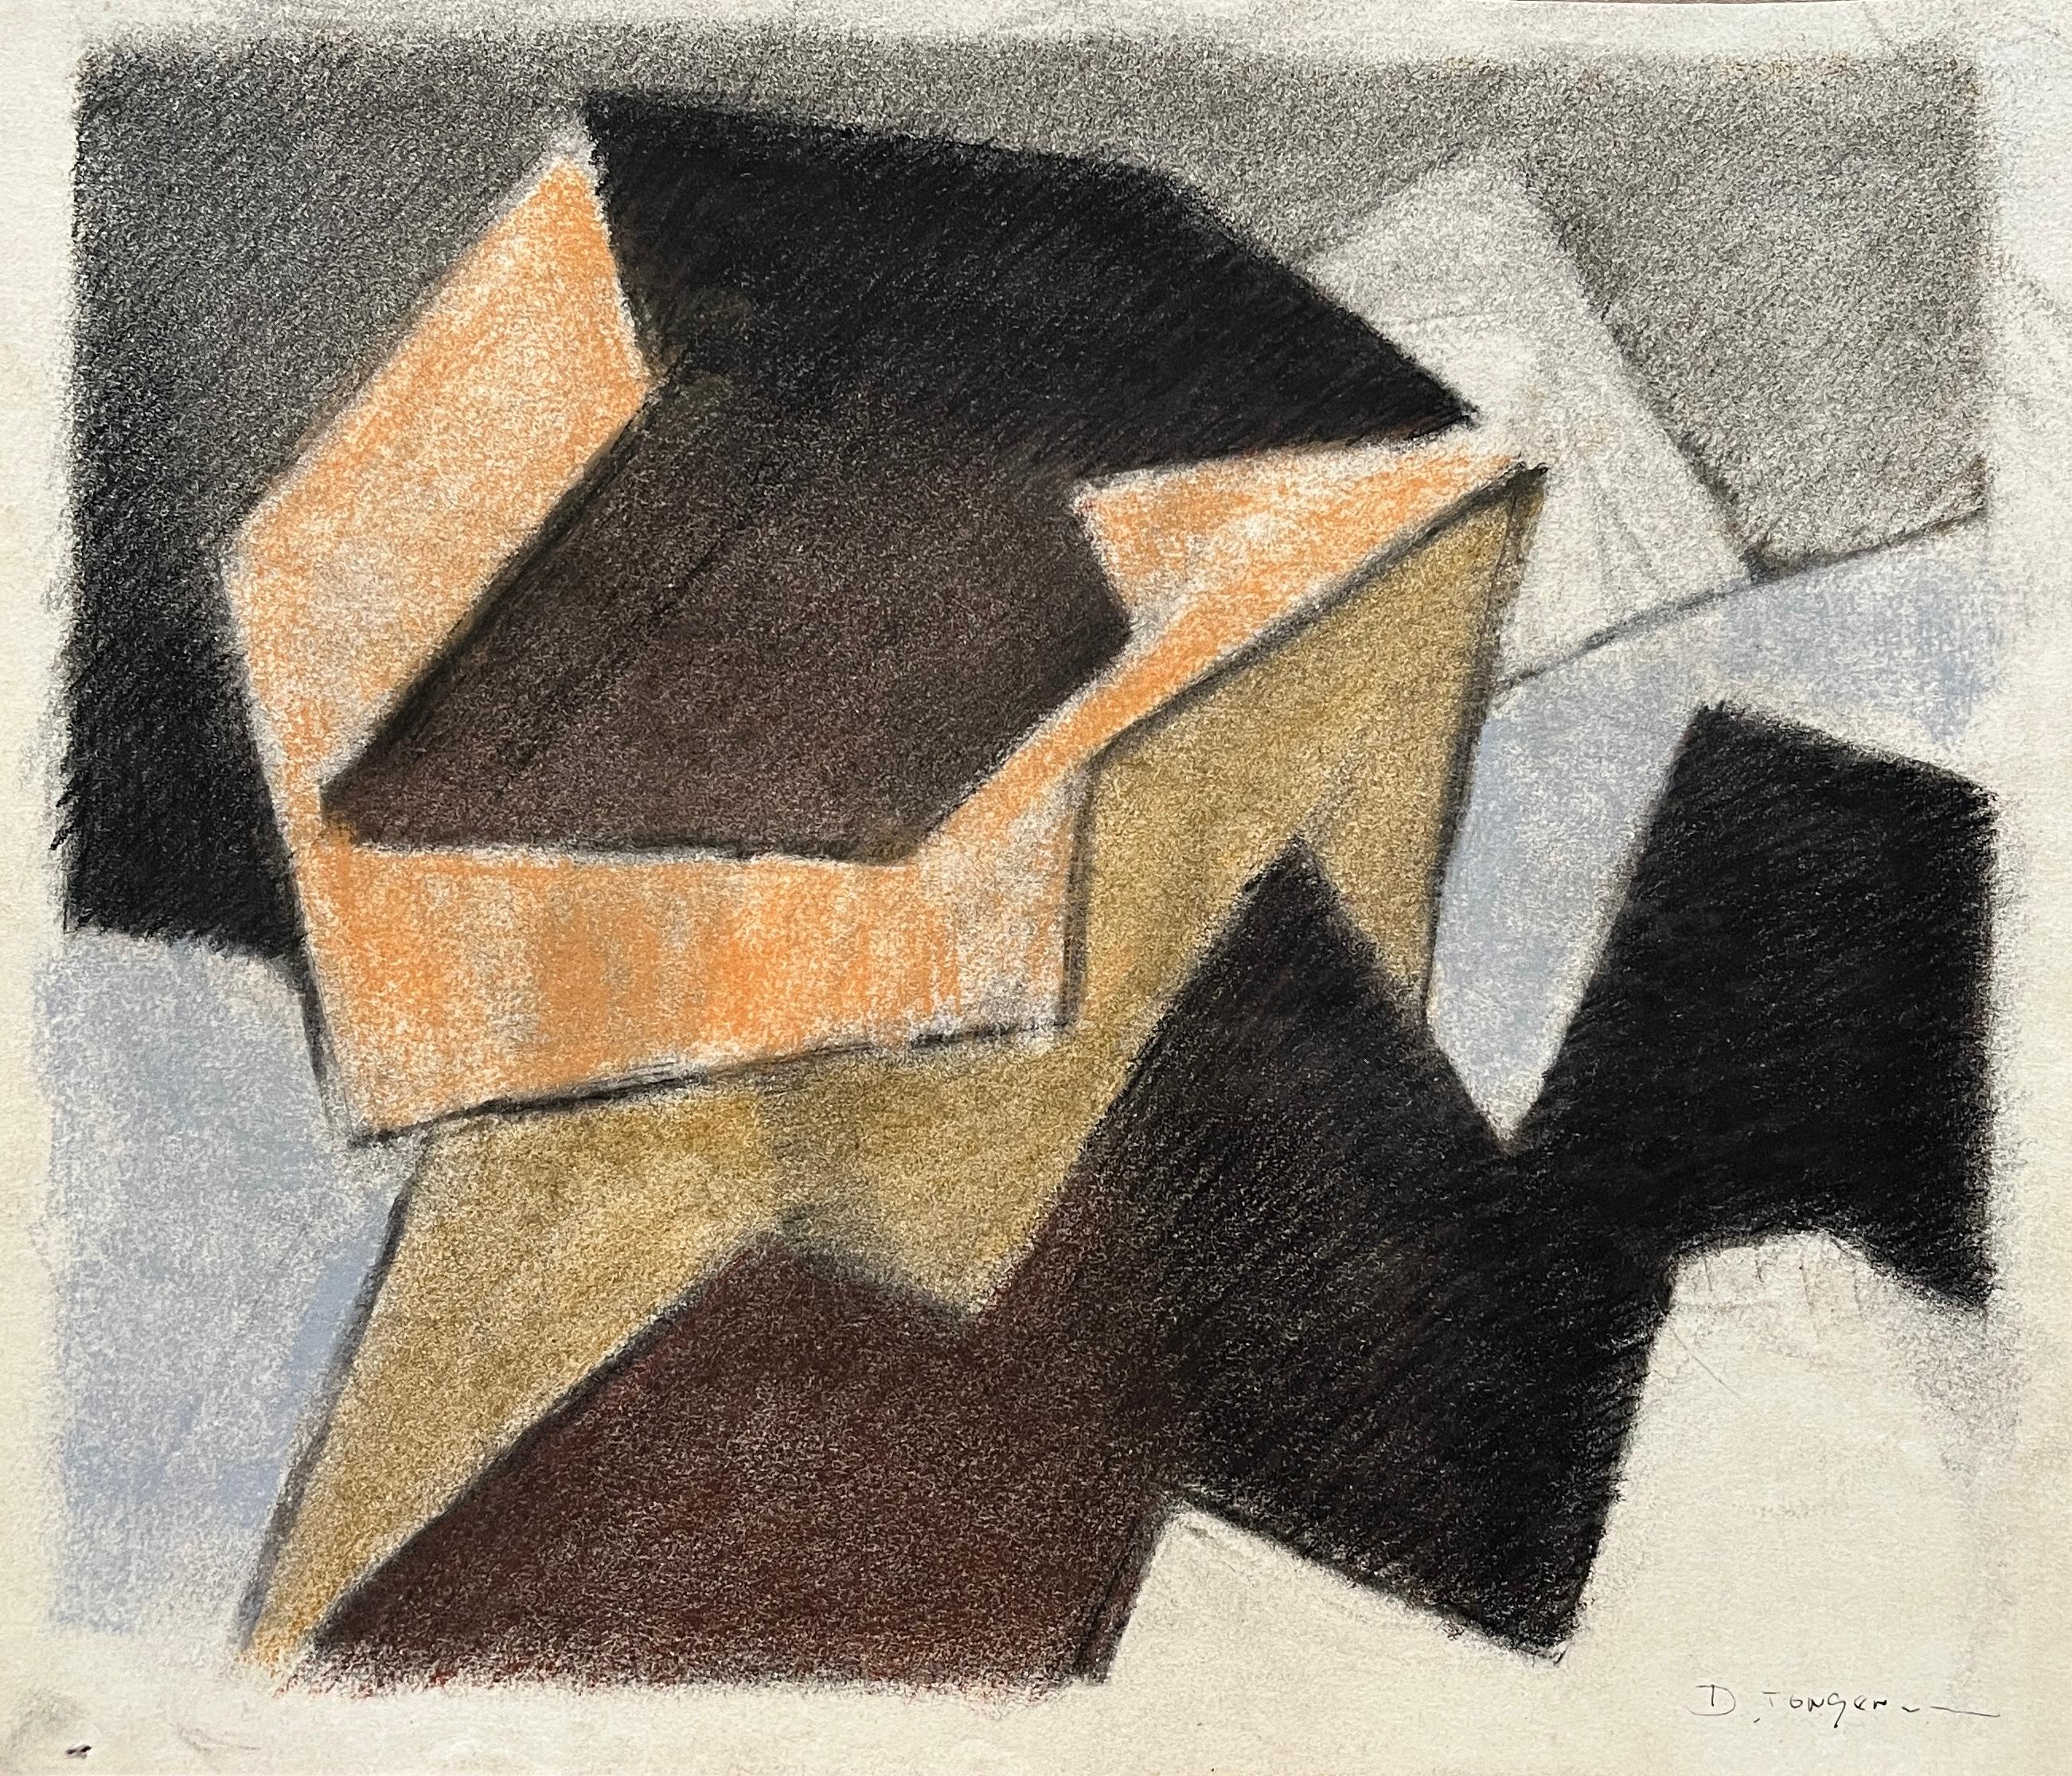 D. Tongen Abstract Drawing – 1980's Cubist "Orange, Brown, Black" Soft Pastell abstrakte Zeichnung